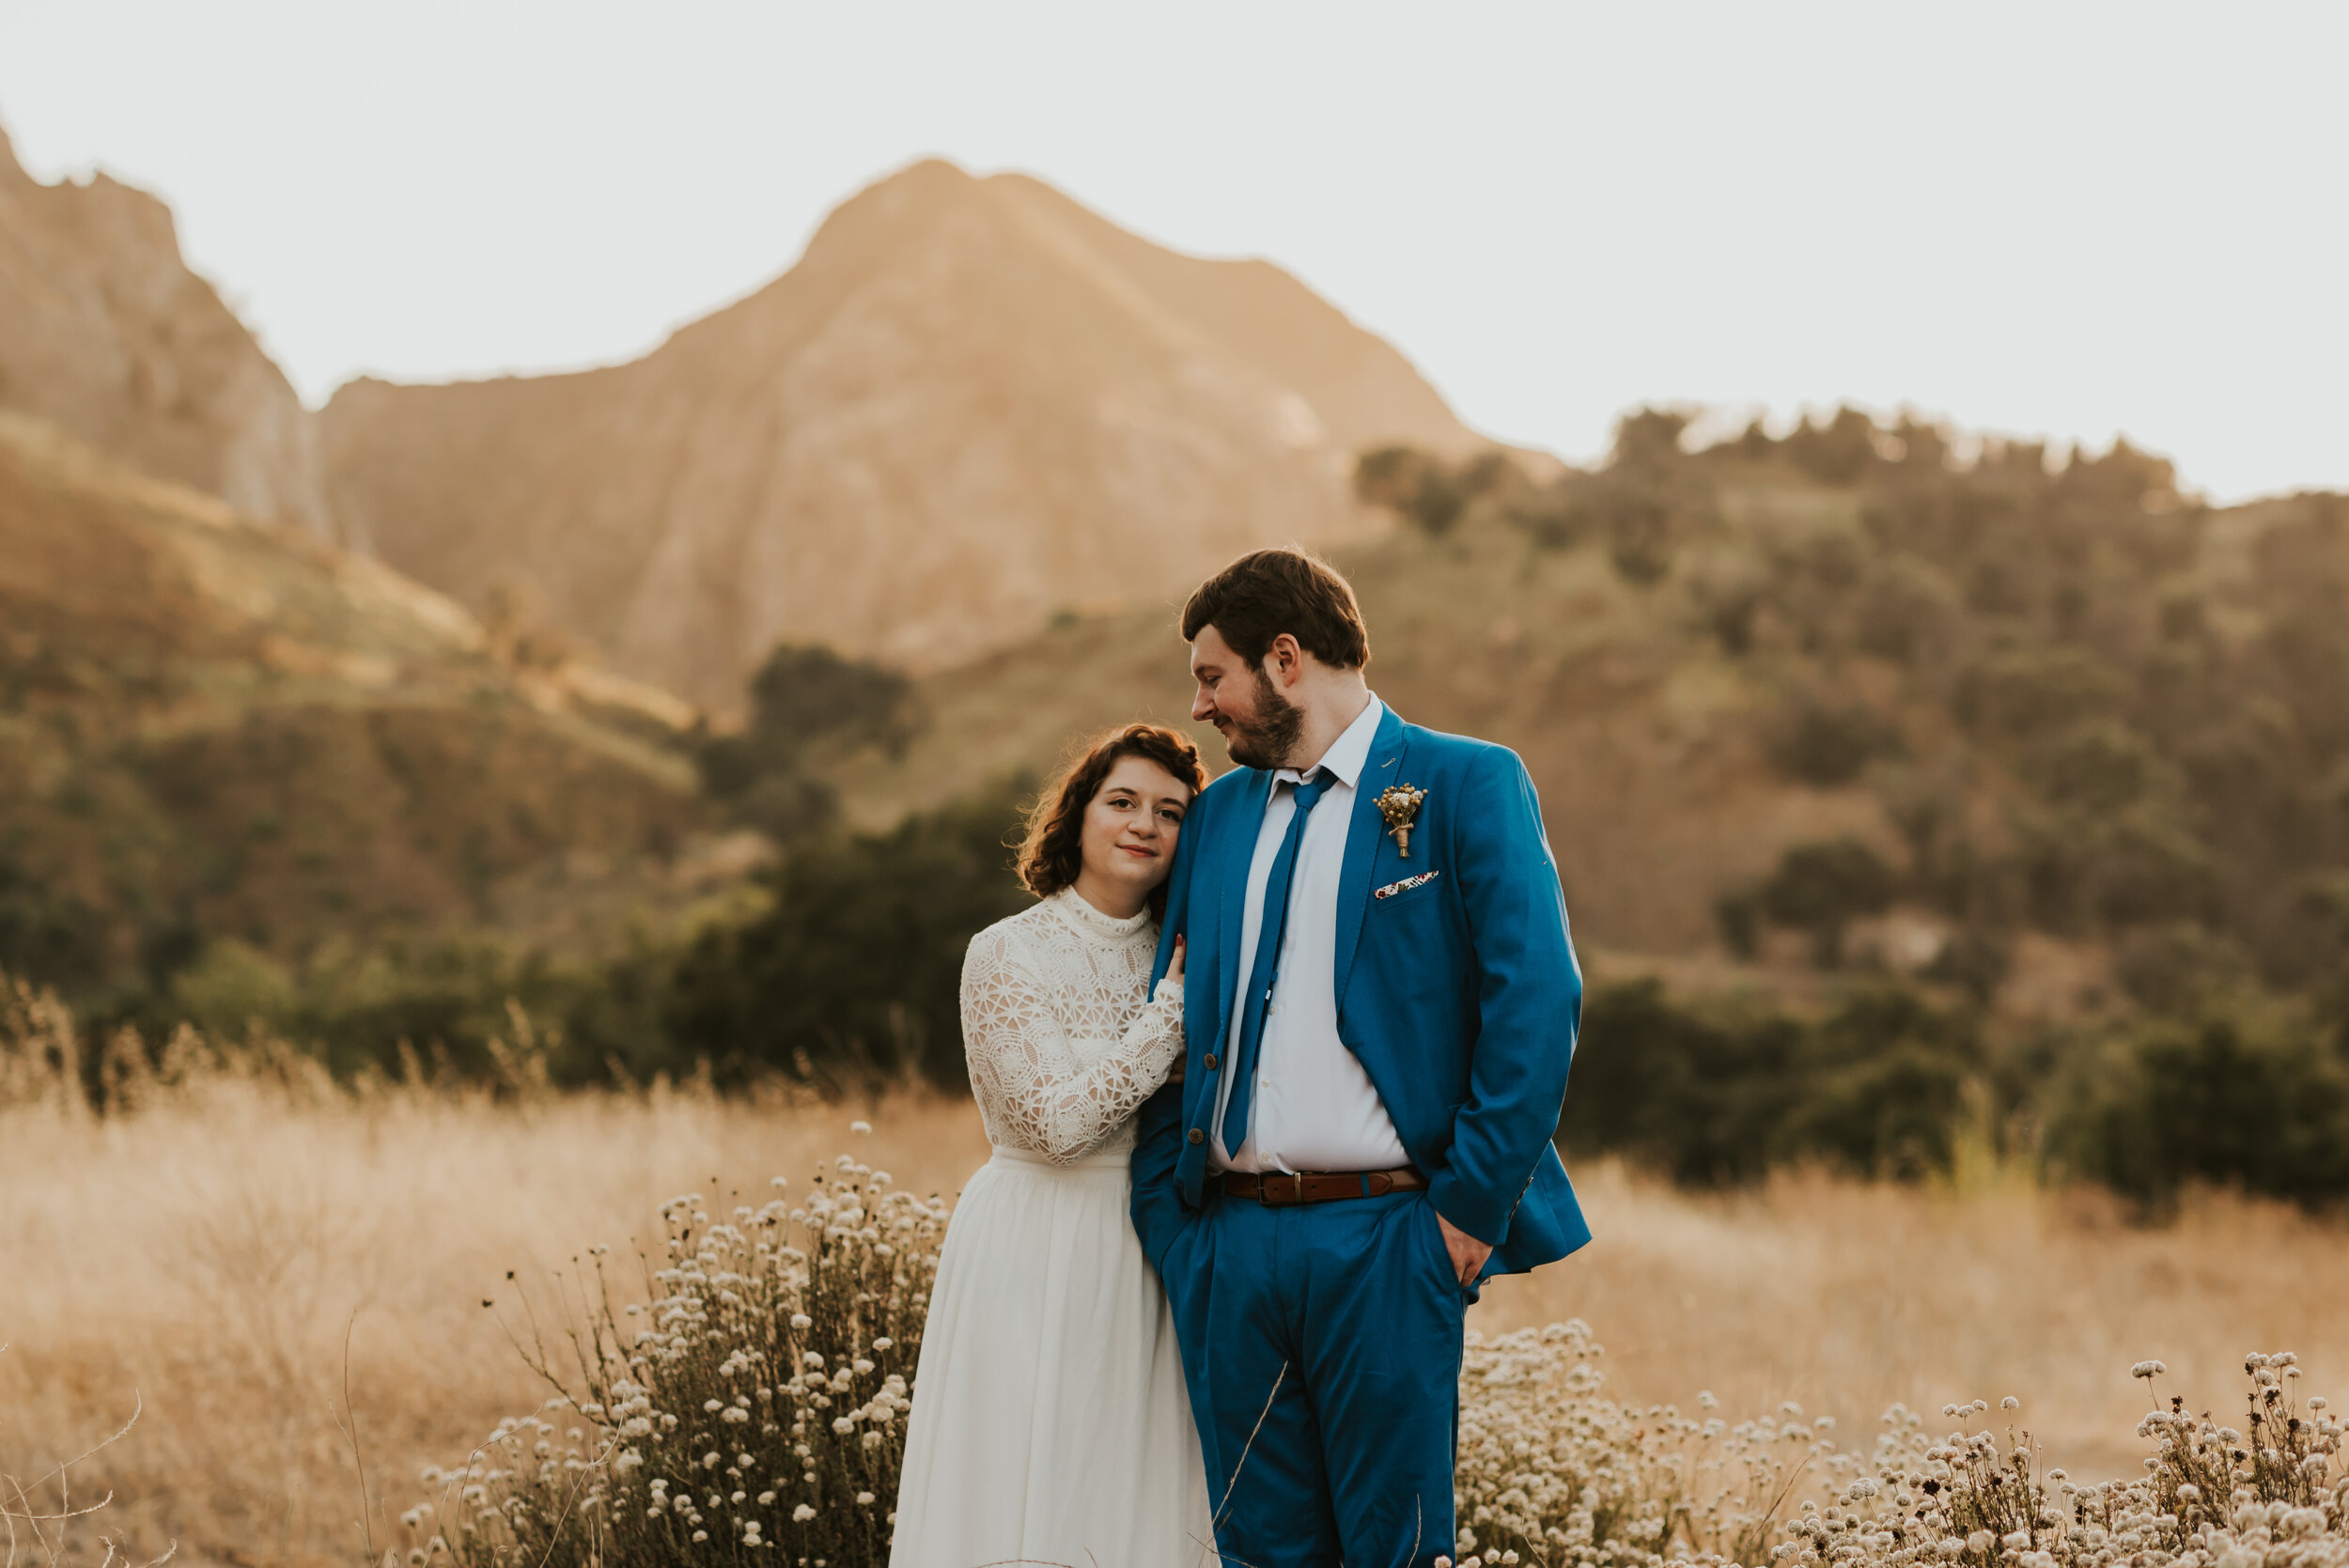 Malibu Creek State Park Pre-Wedding Couples Portraits | Malibu Creek State Park Elopement | California Elopement Photographer | Southern California Mountain Elopement | Malibu Canyon